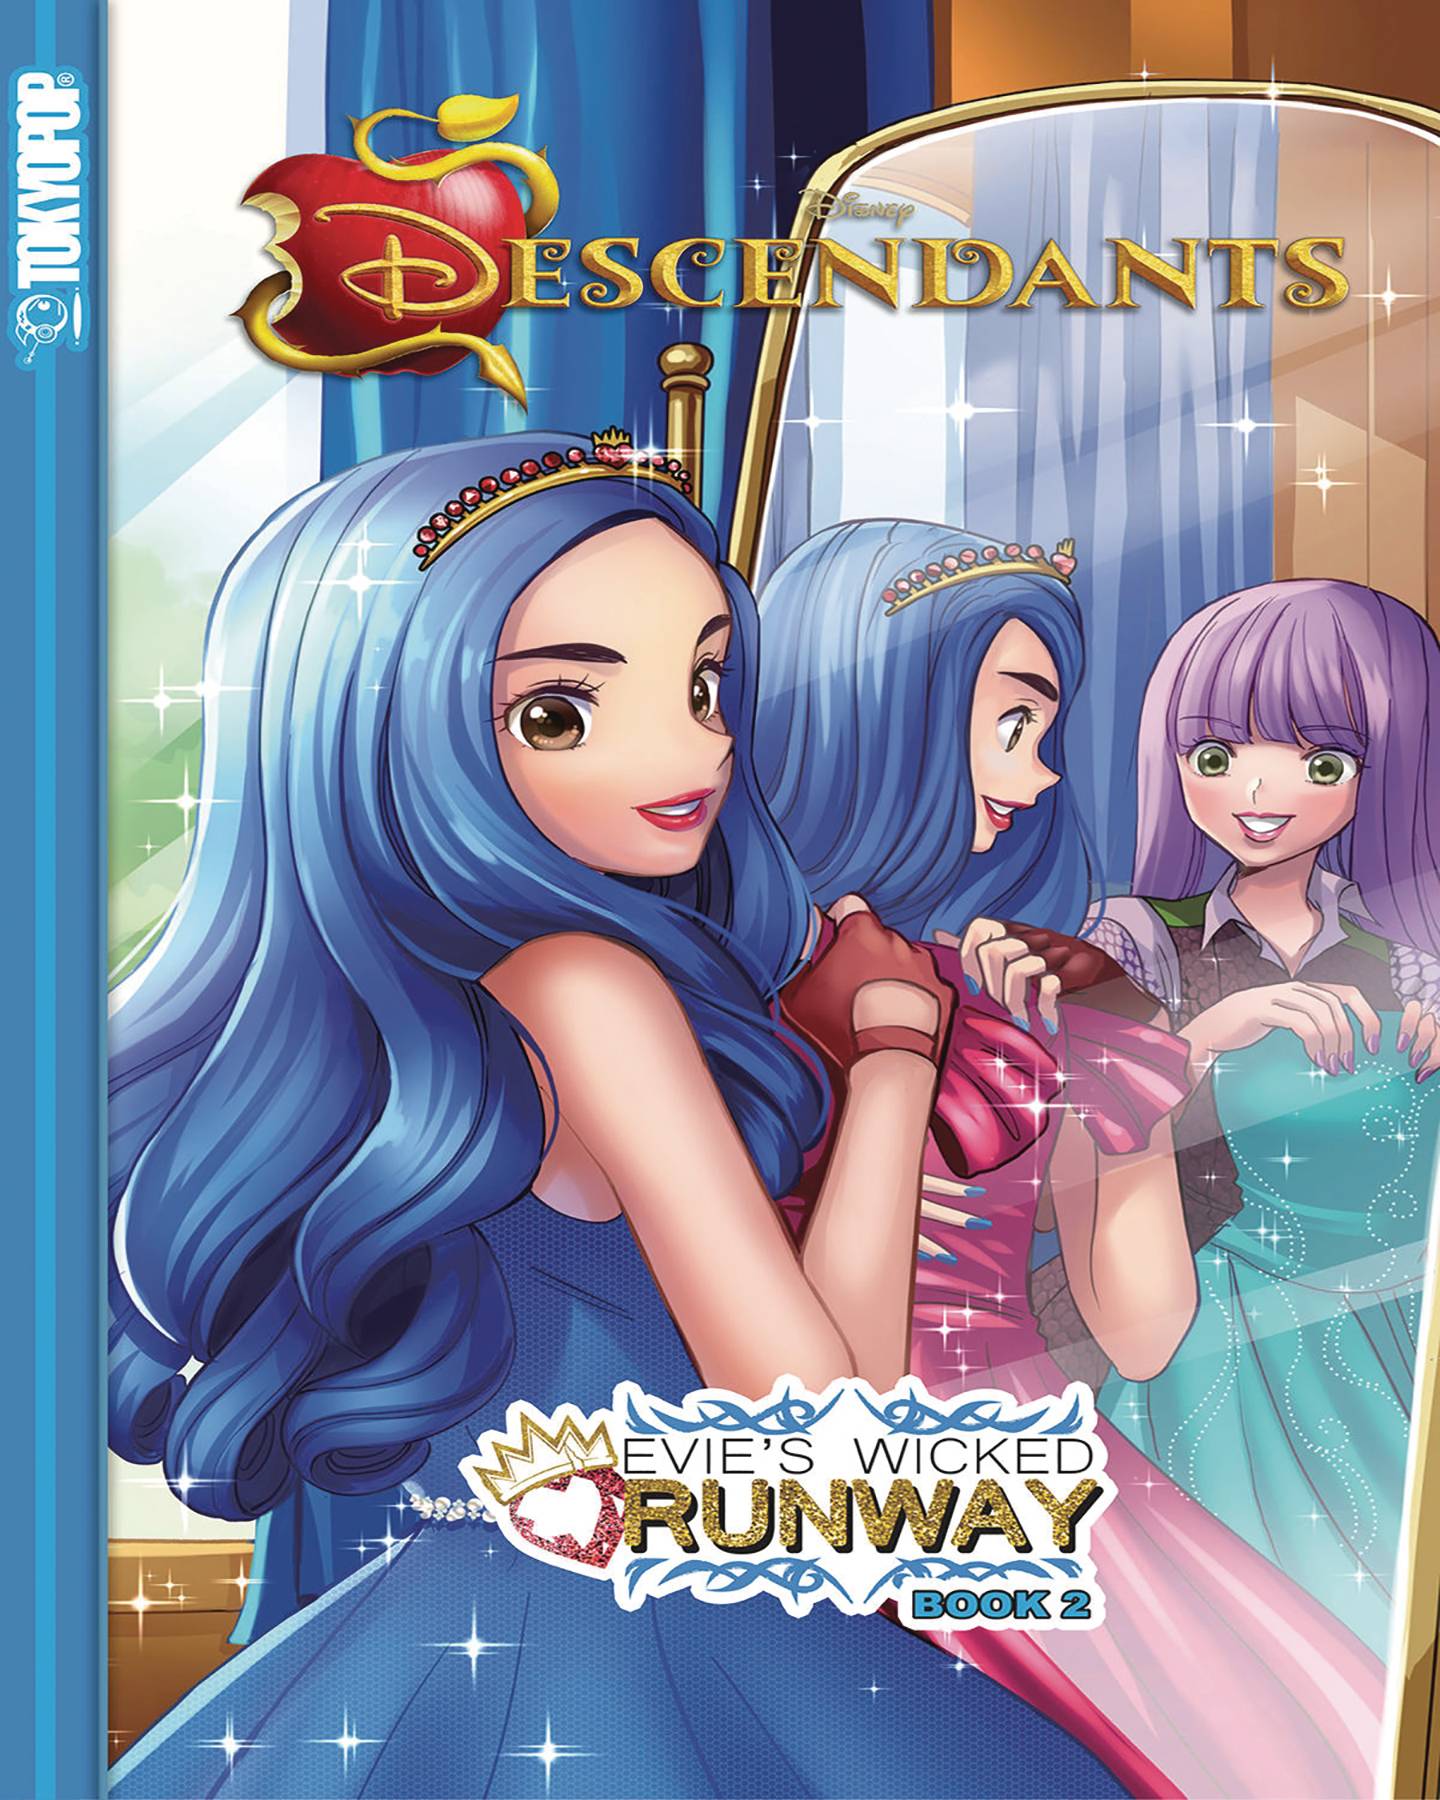 Disney Descendants Evies Wicked Runway Manga Volume 2